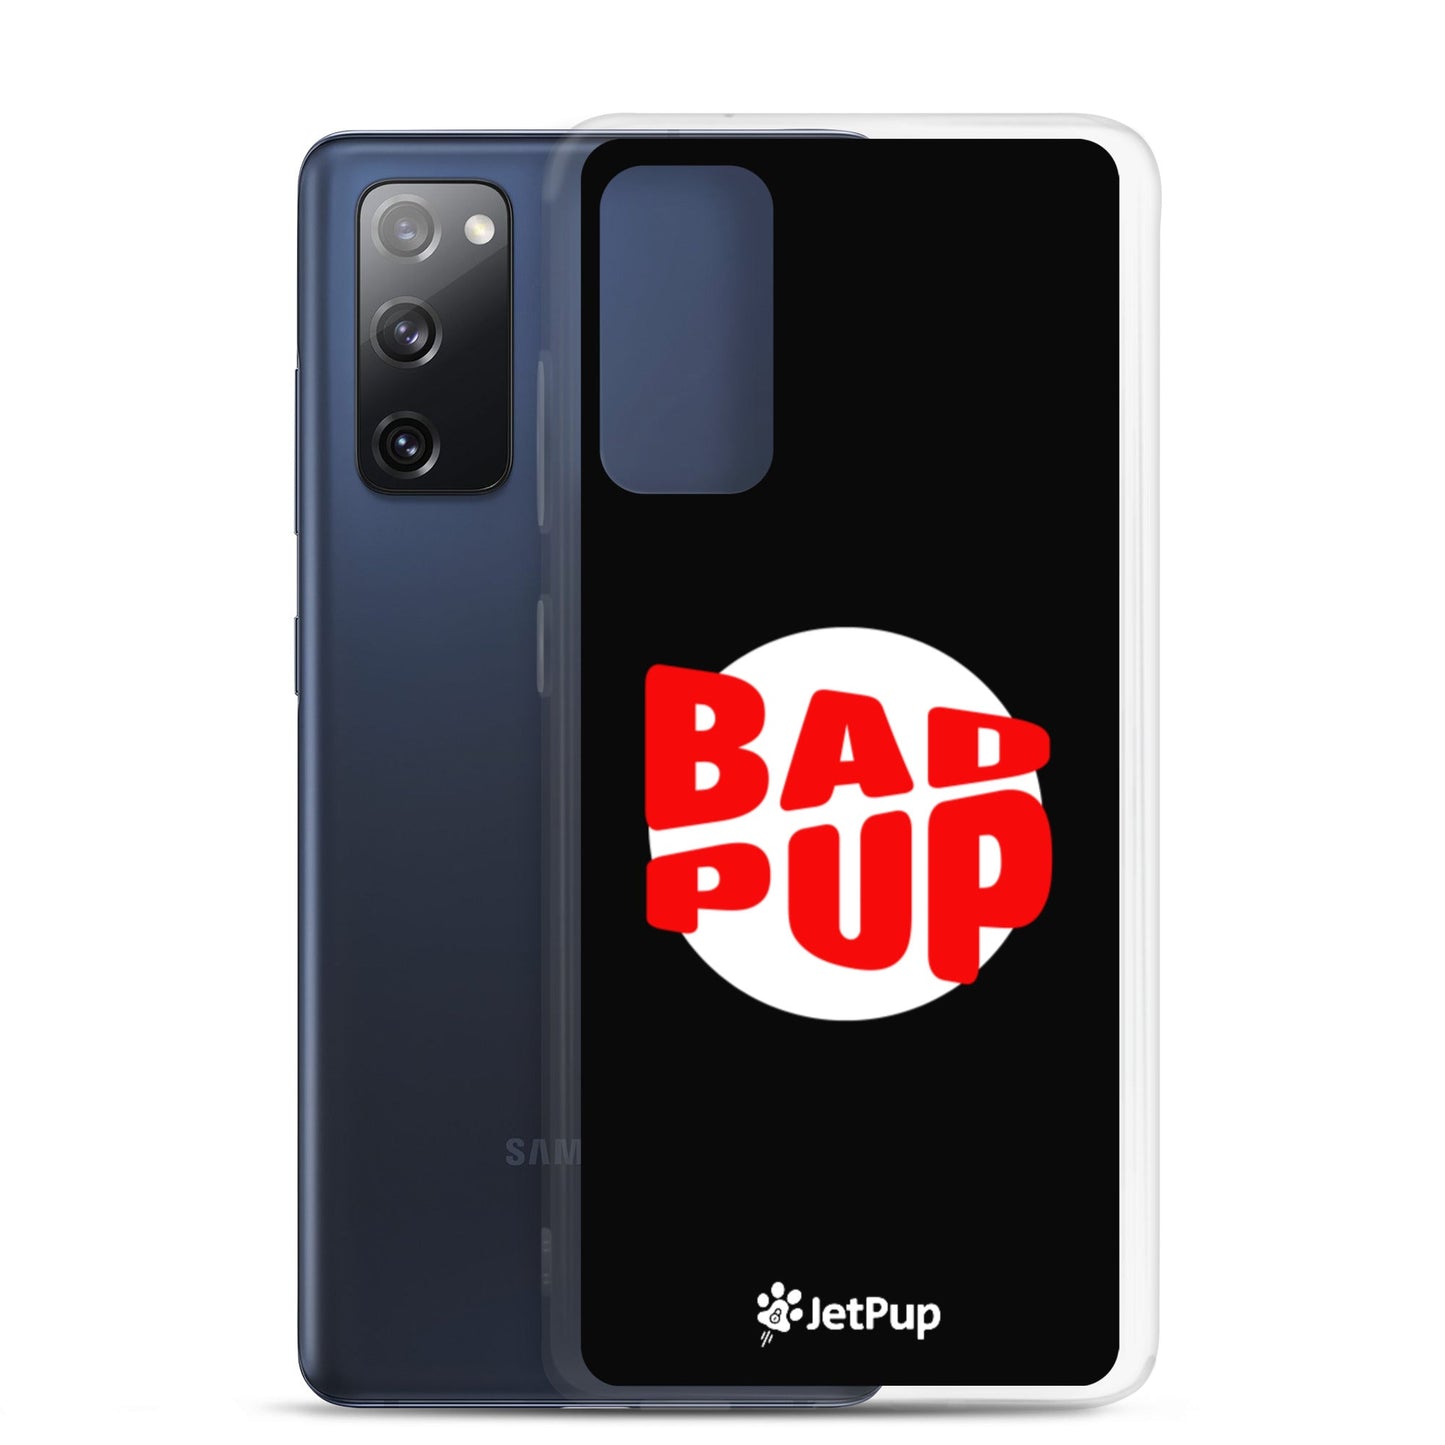 Bad Pup Samsung Case - Black - JetPup